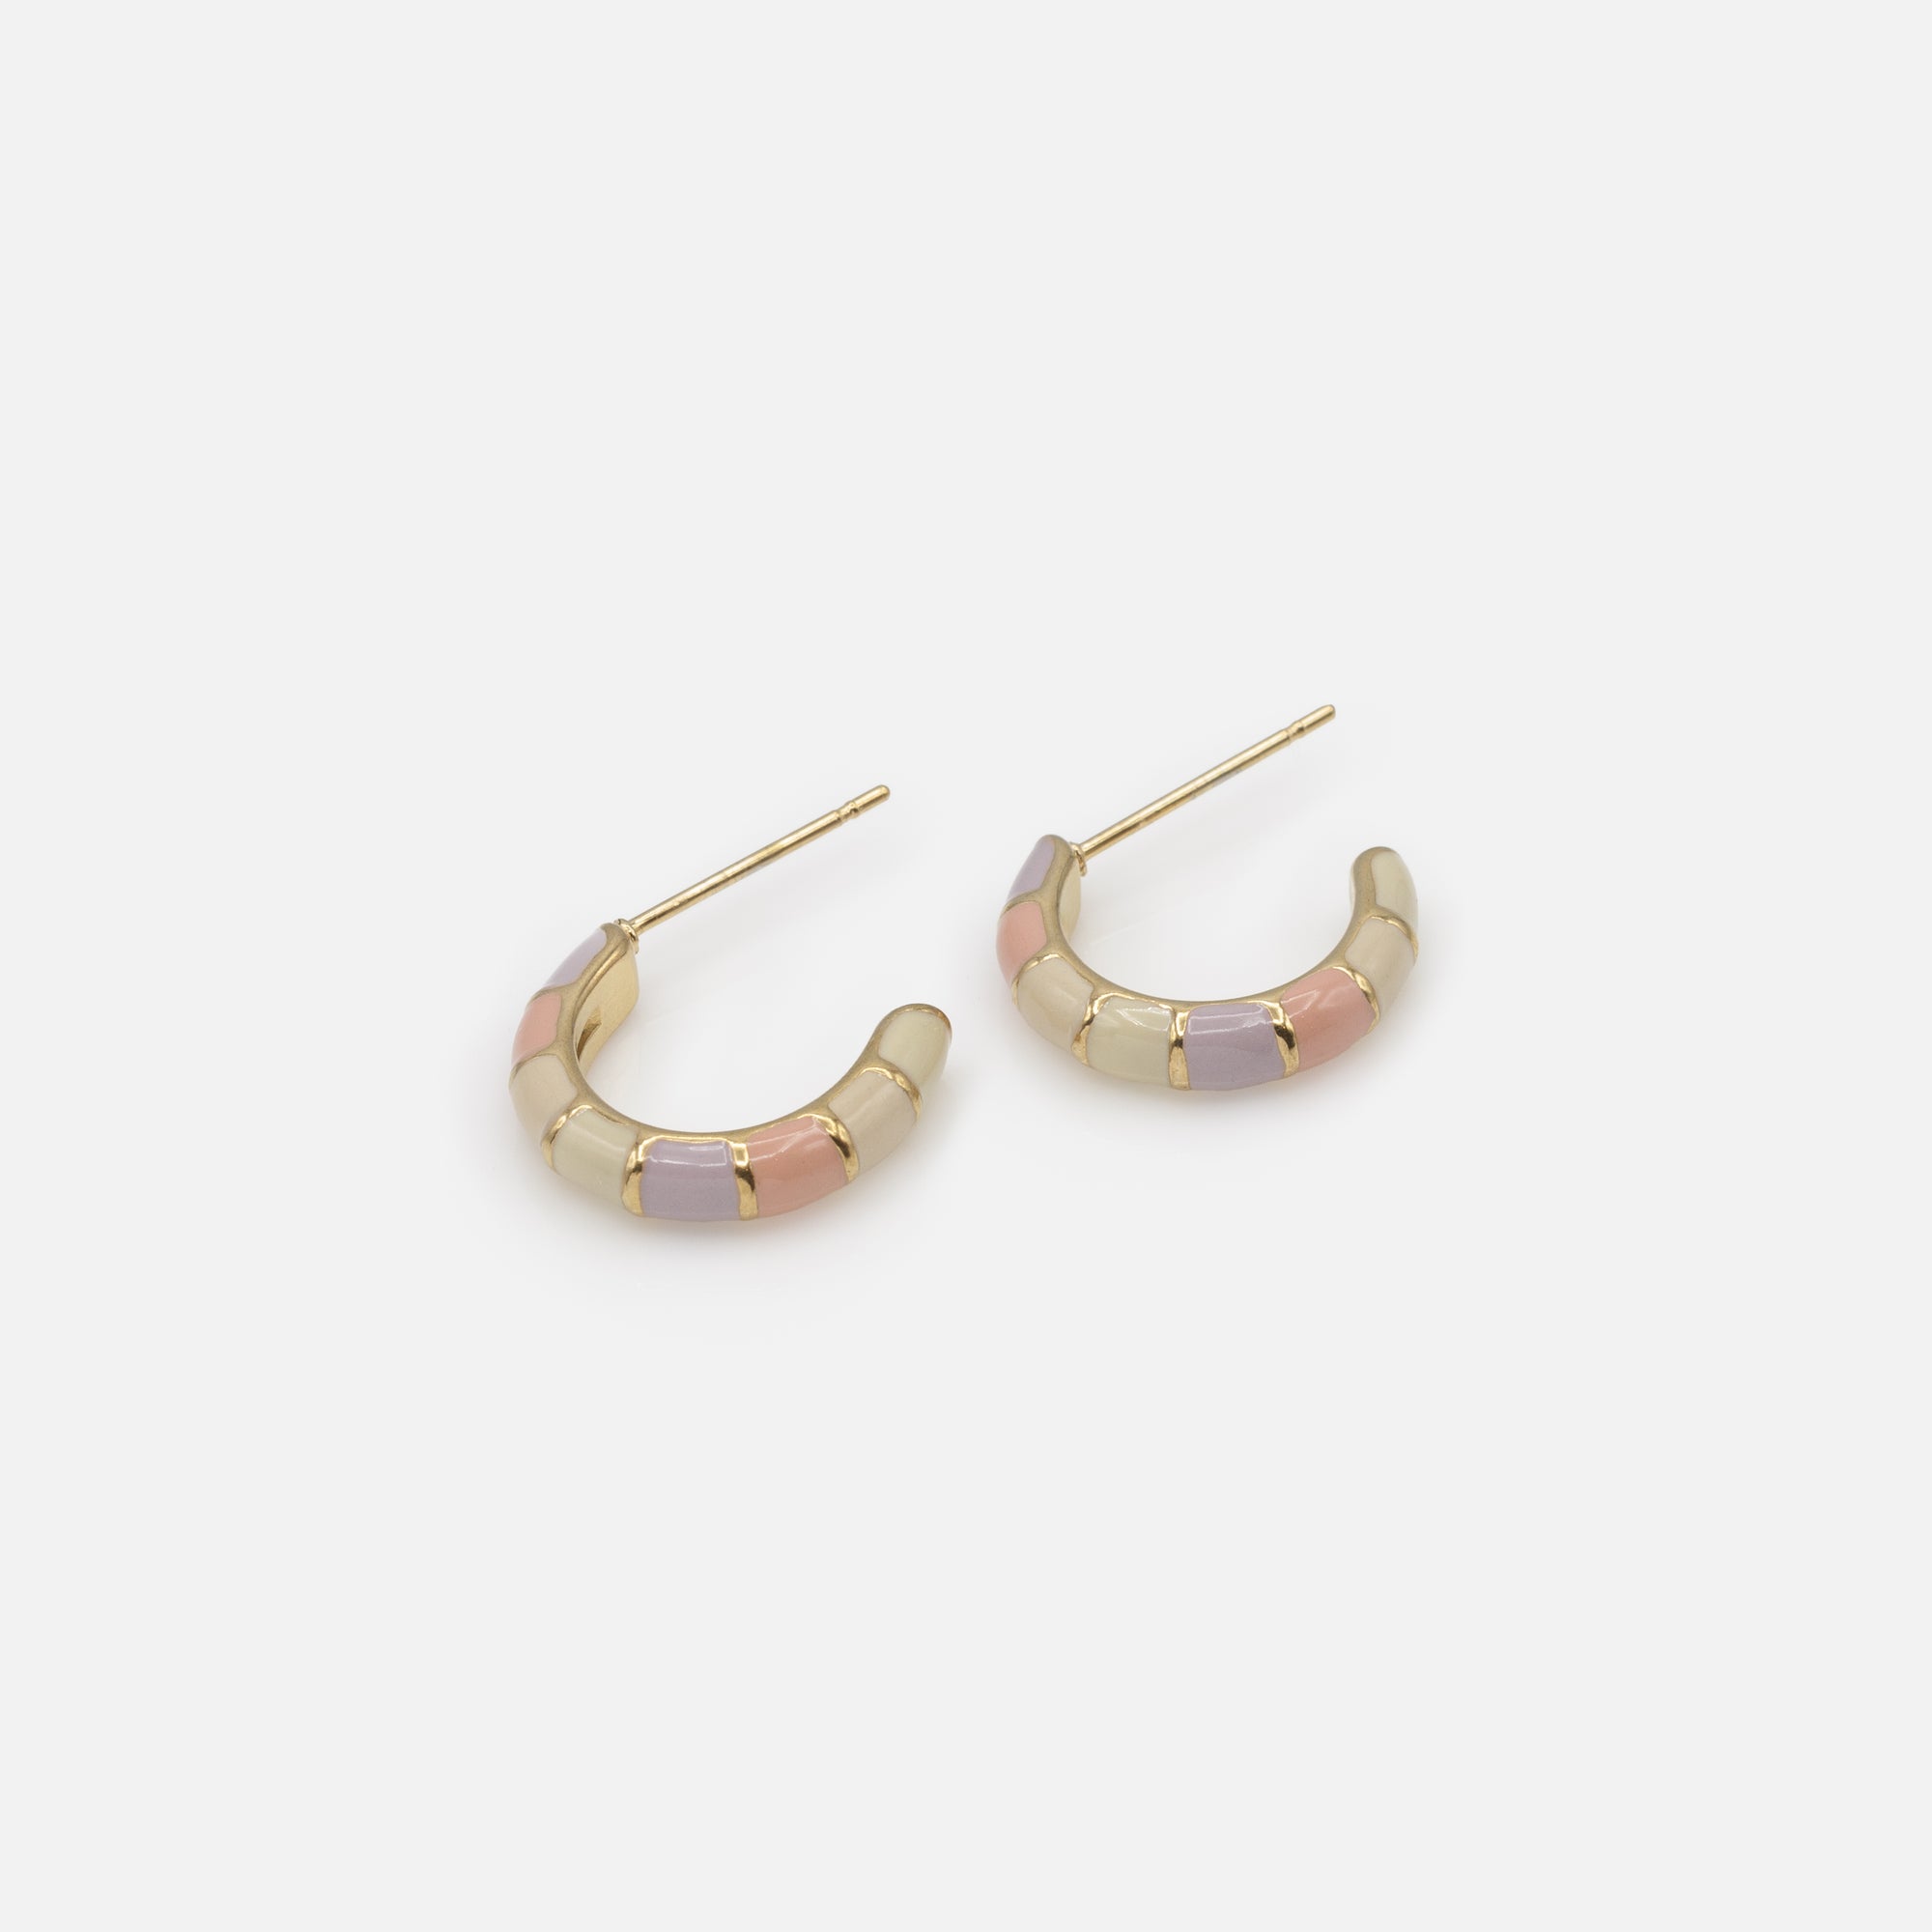 Multicolored open hoop earrings in stainless steel